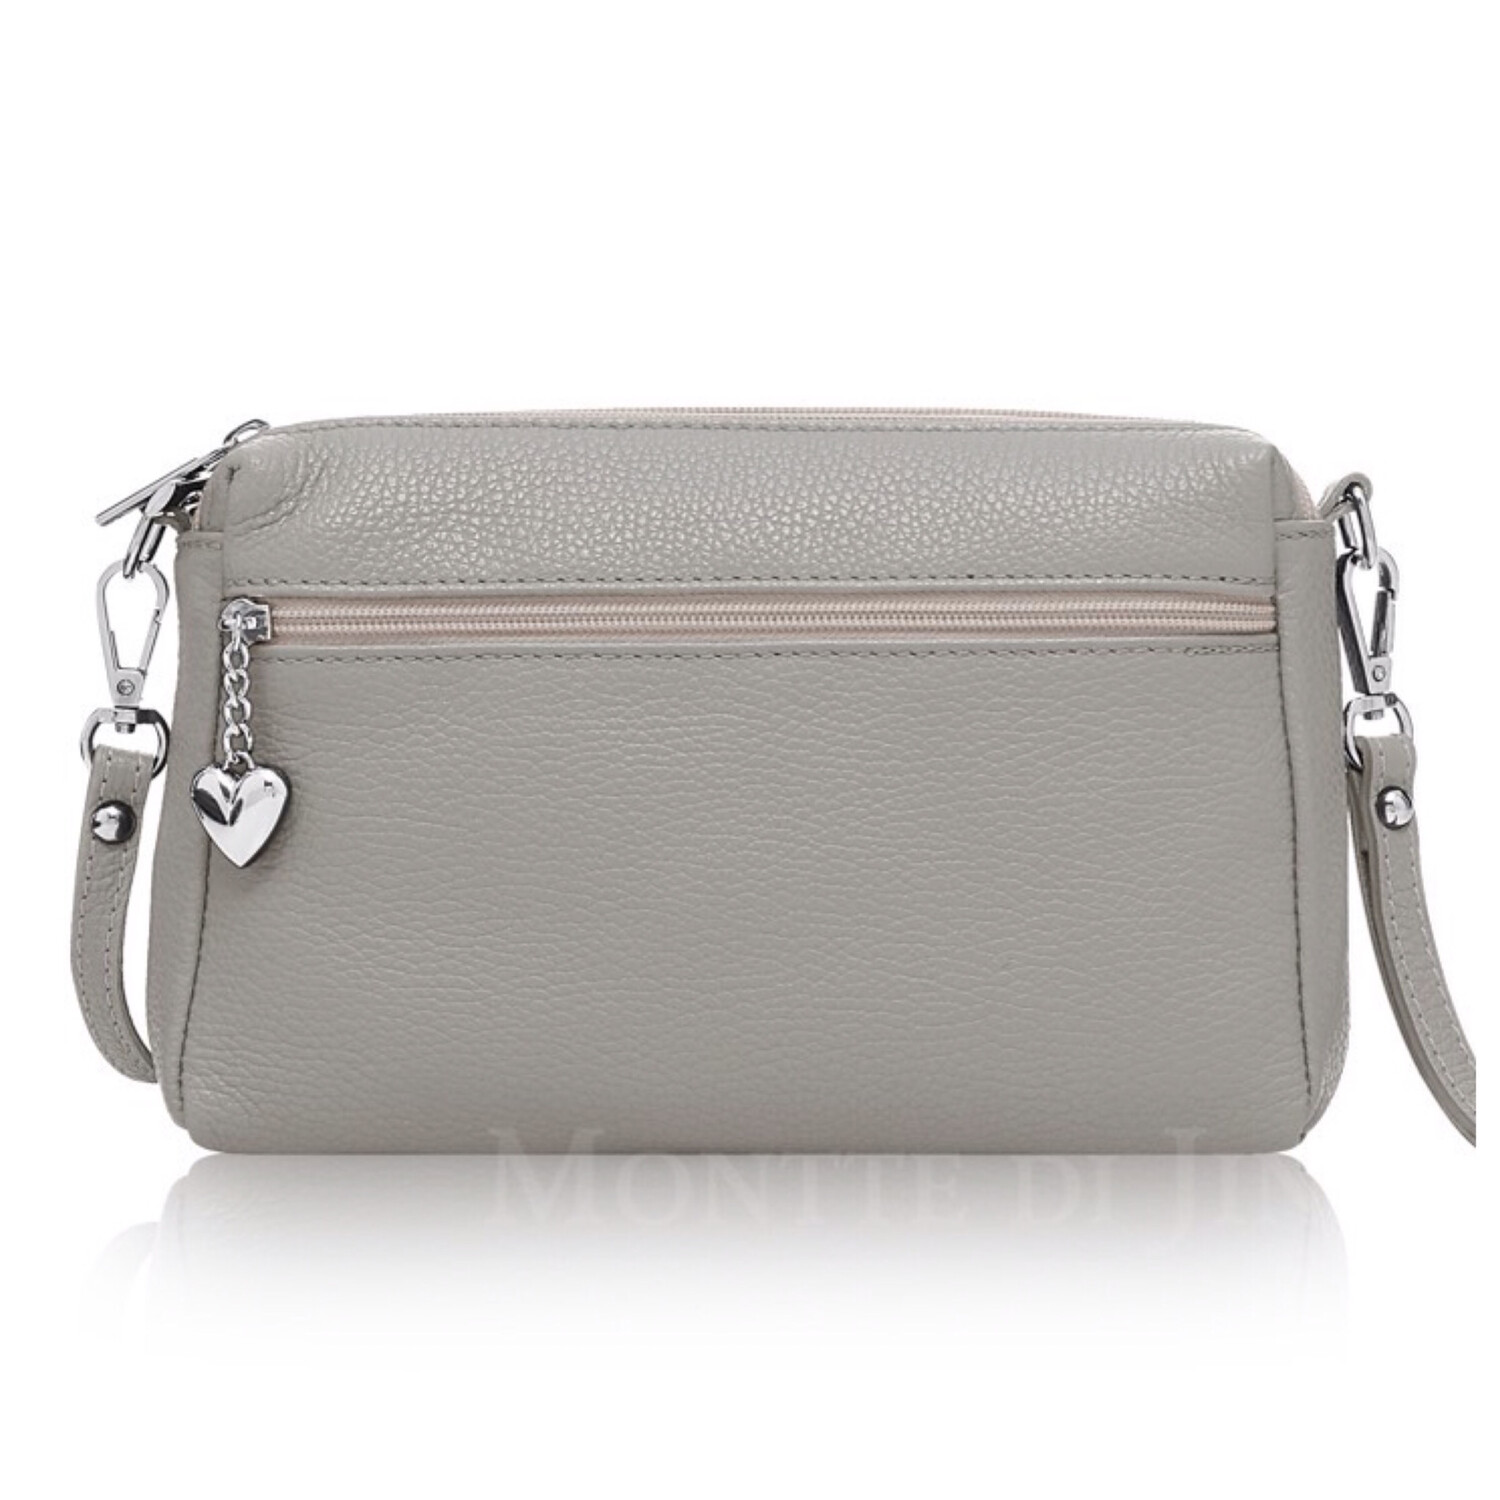 Grey Multi Pocket Textured Leather Bag